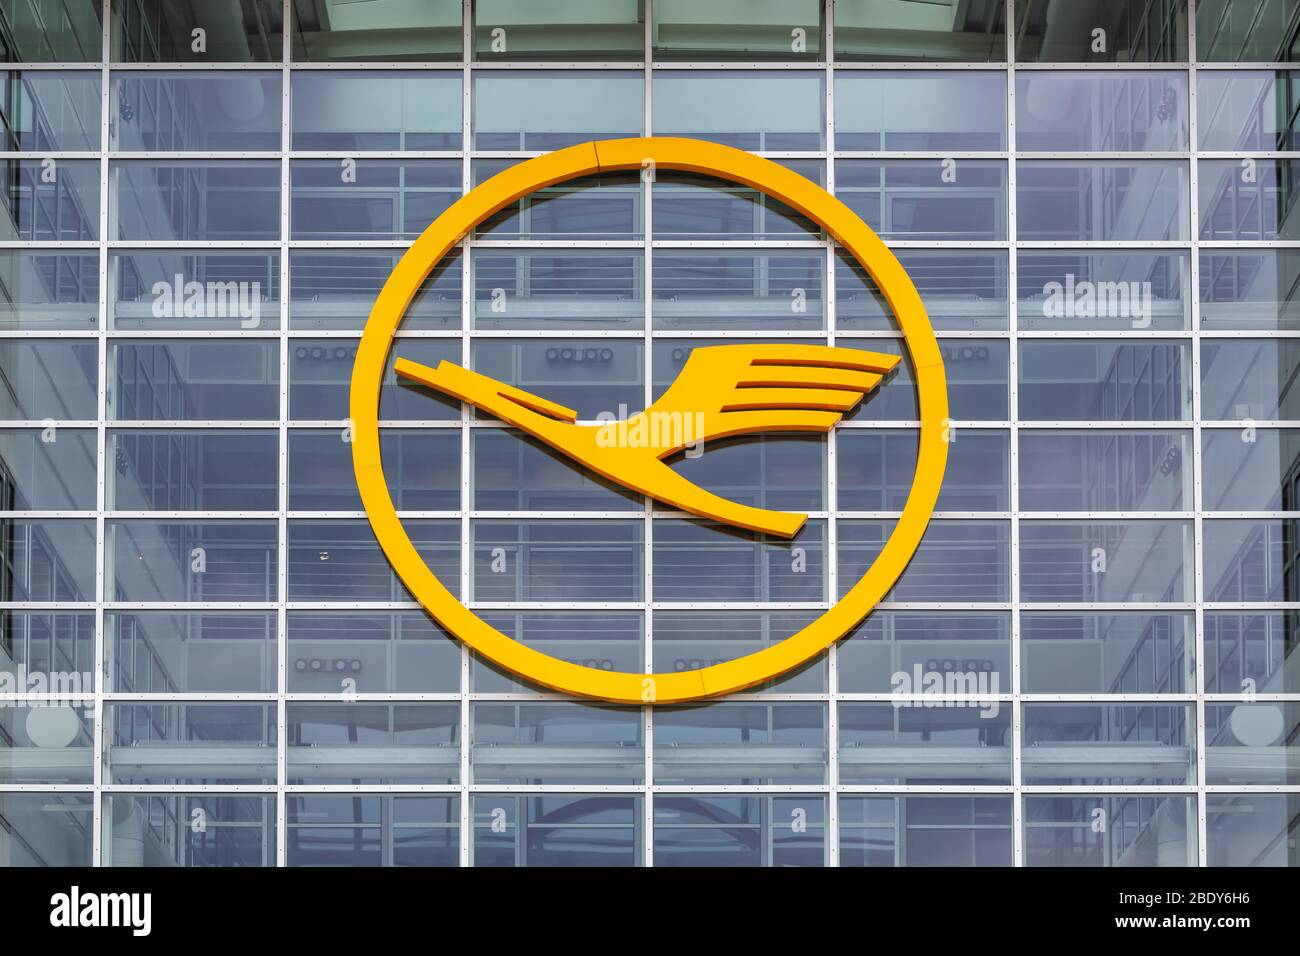 Frankfurt, Germany – April 25, 2018: Lufthansa crane logo at Frankfurt airport (FRA) in Germany. Stock Photo